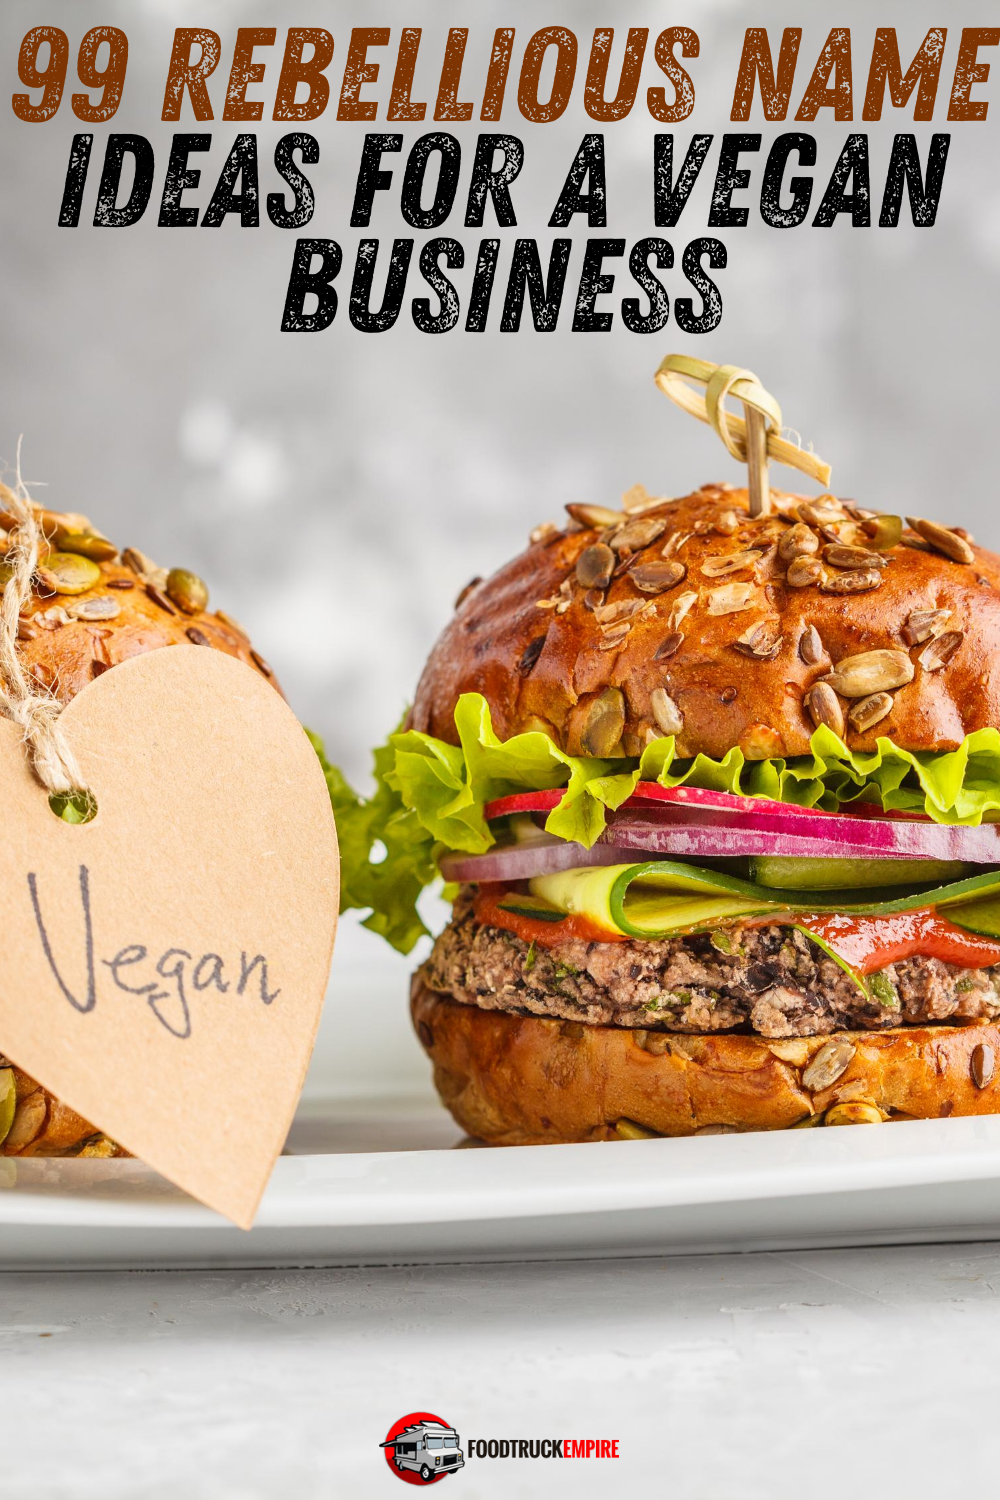  Rebellious Name Ideas For A Vegan Business - Name Ideas For Vegan Business